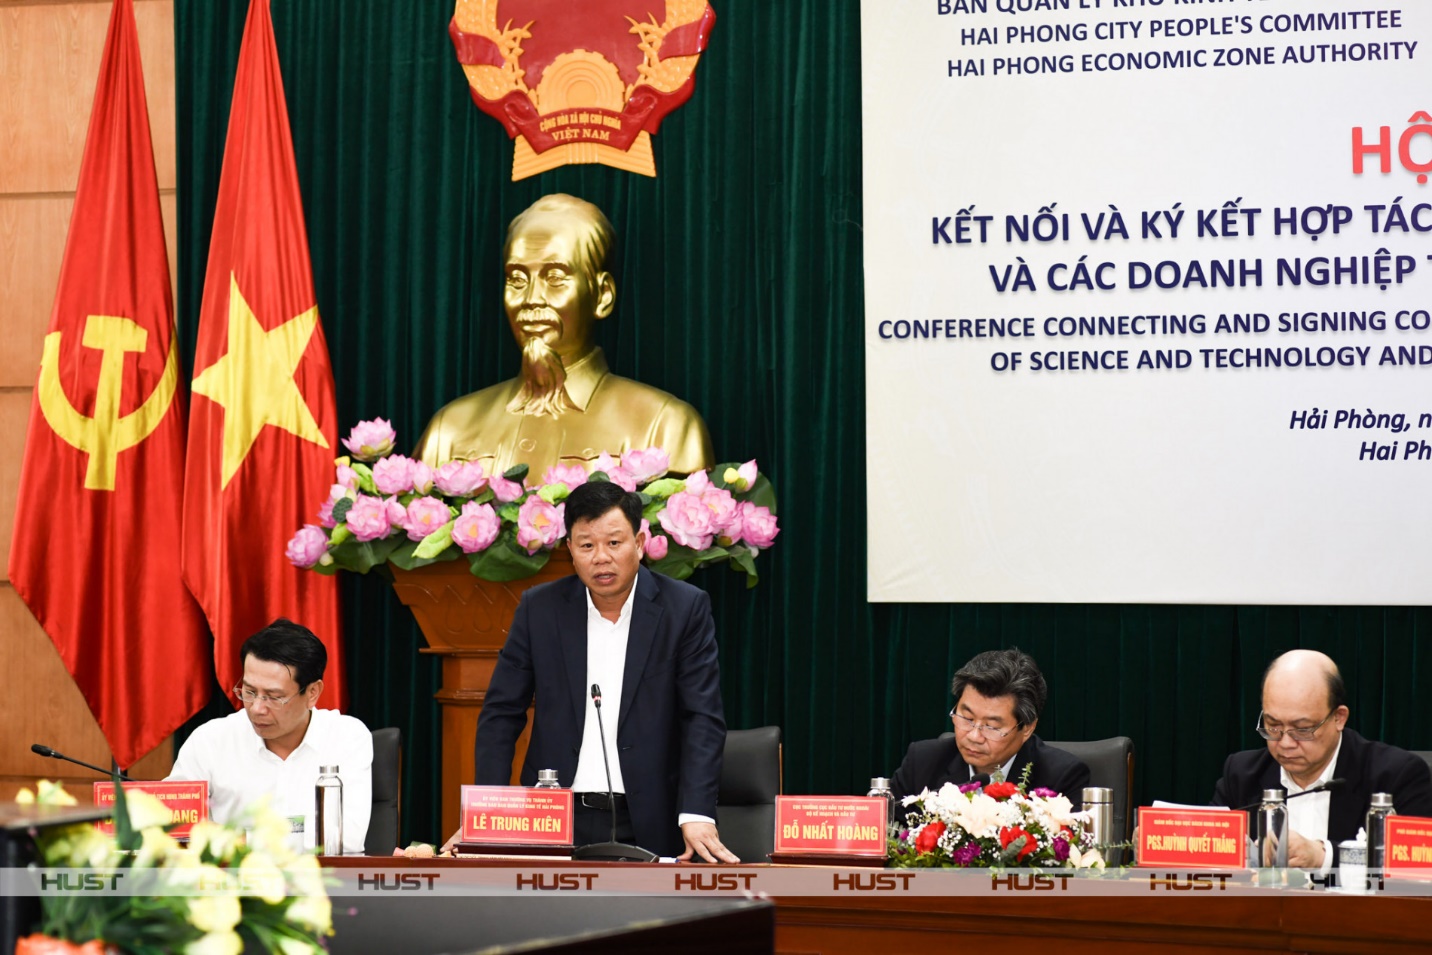 Mr. Le Trung Kien, Head of Heza at Conference